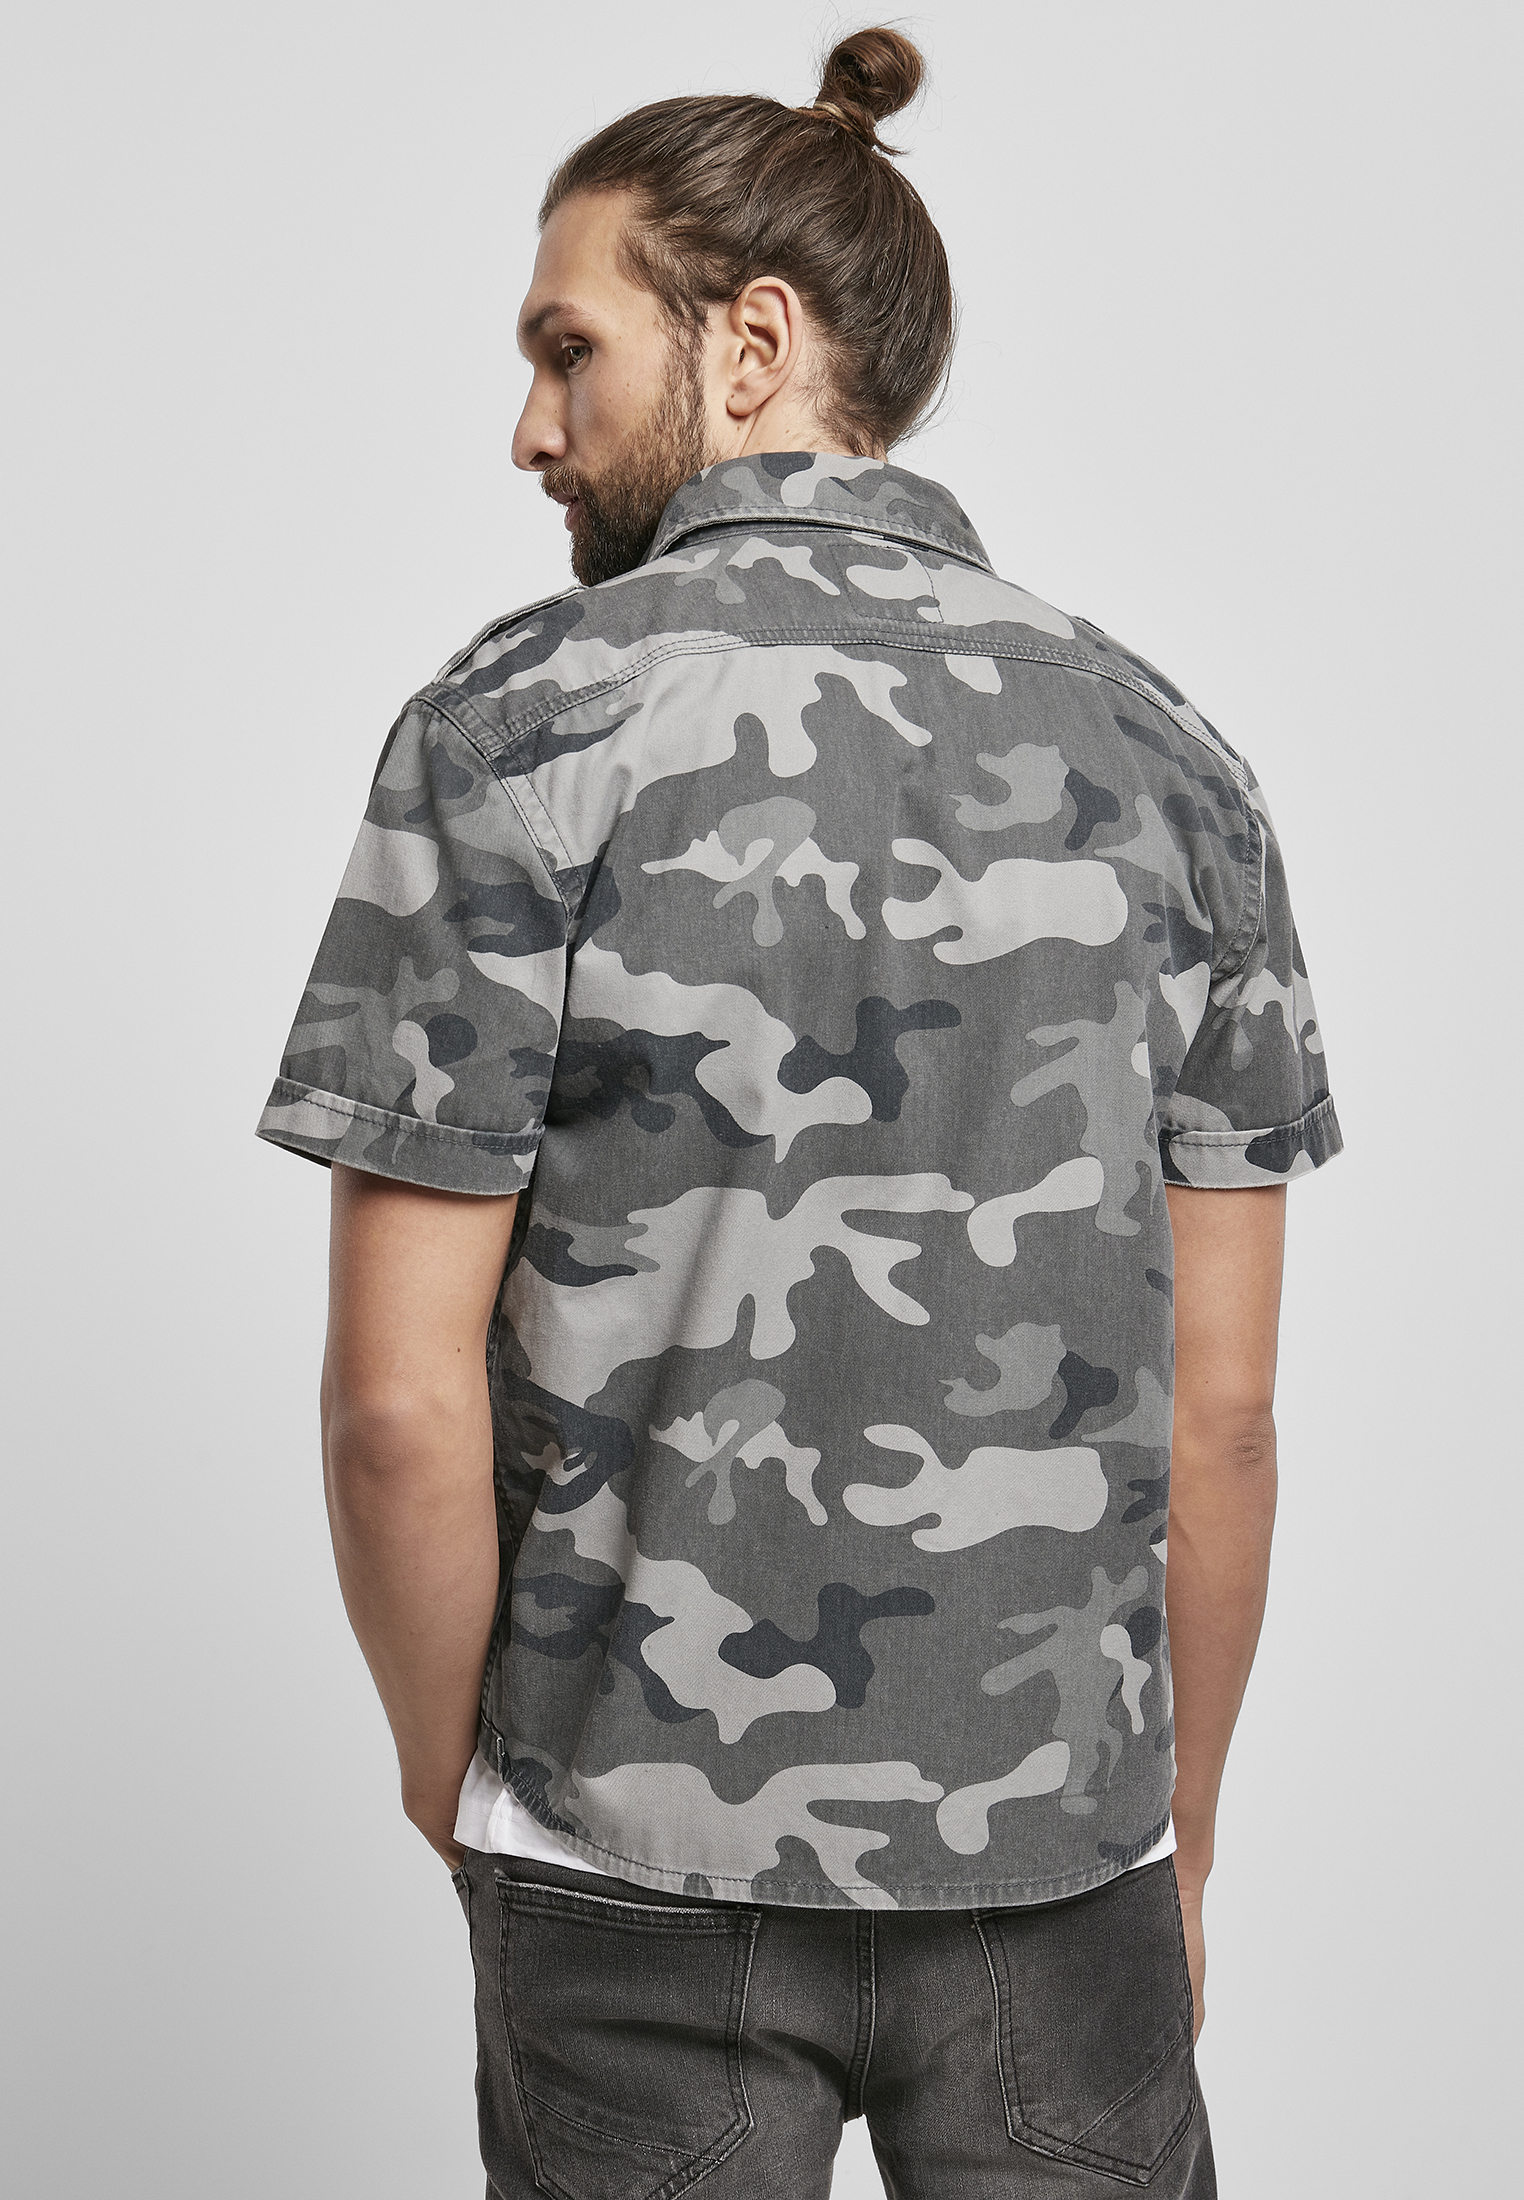 Hemden Vintage Shirt shortsleeve in Farbe grey camo